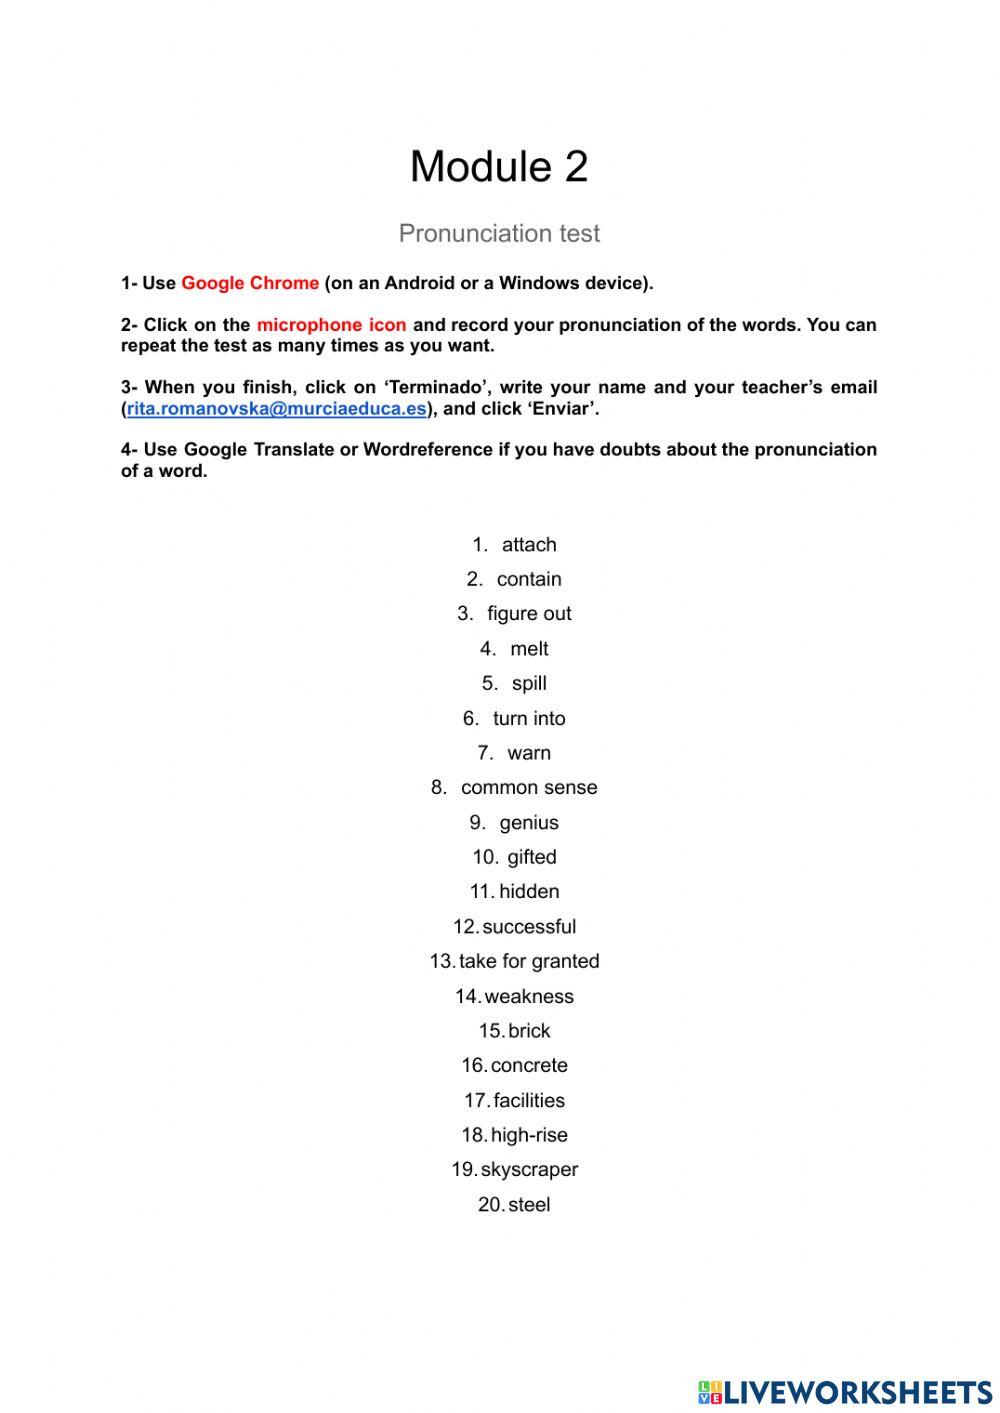 Network 4 Module 2 Pronunciation Test